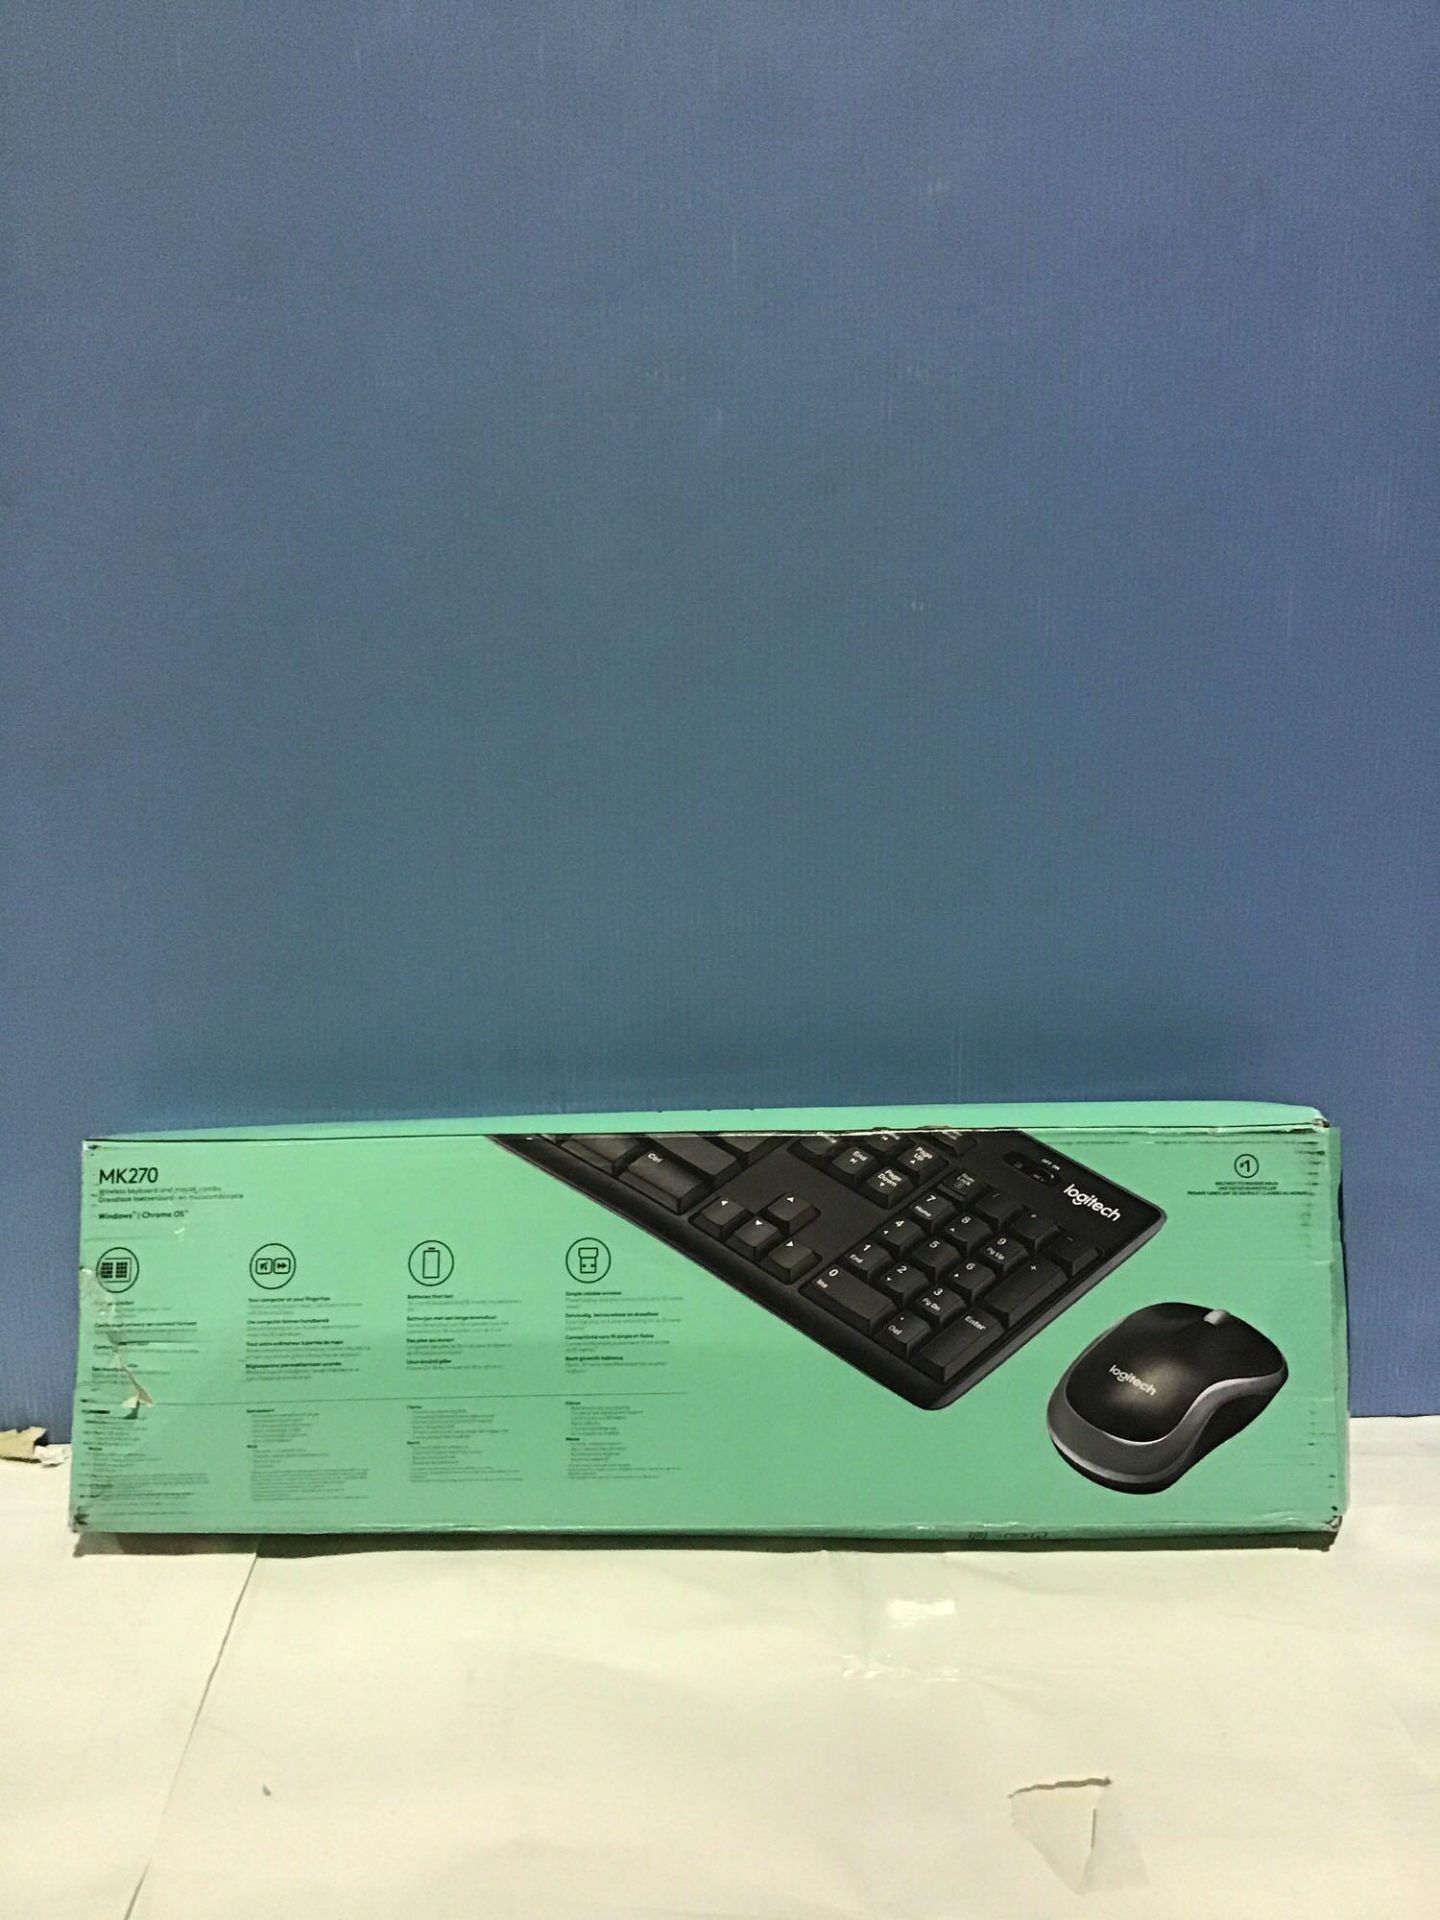 Logitech MK270 Wireless Keyboard and Mouse Combo - Image 3 of 5